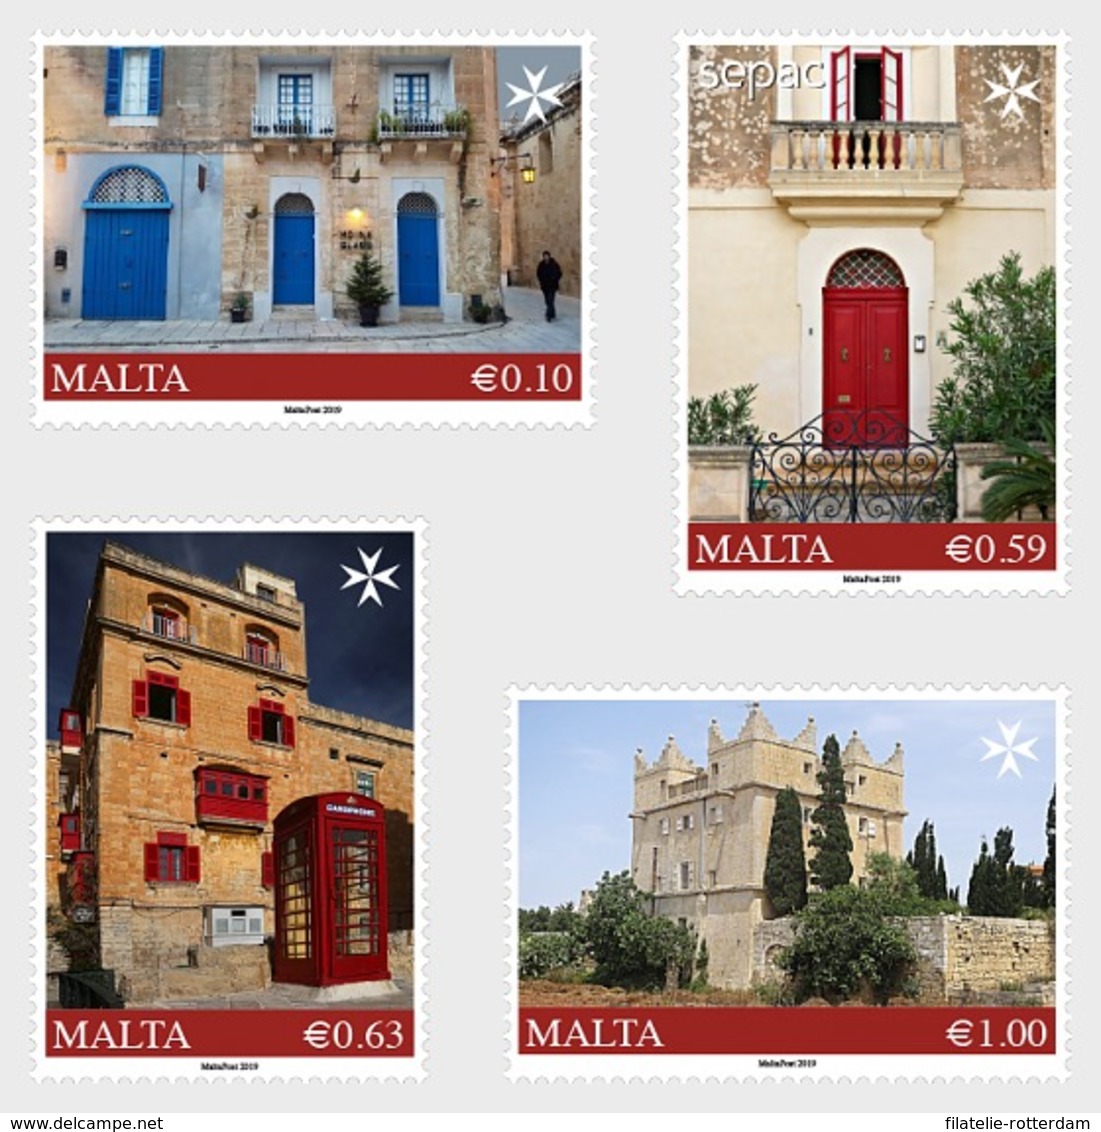 Malta / Malte - Postfris / MNH - Complete Set SEPAC 2019 - Malta